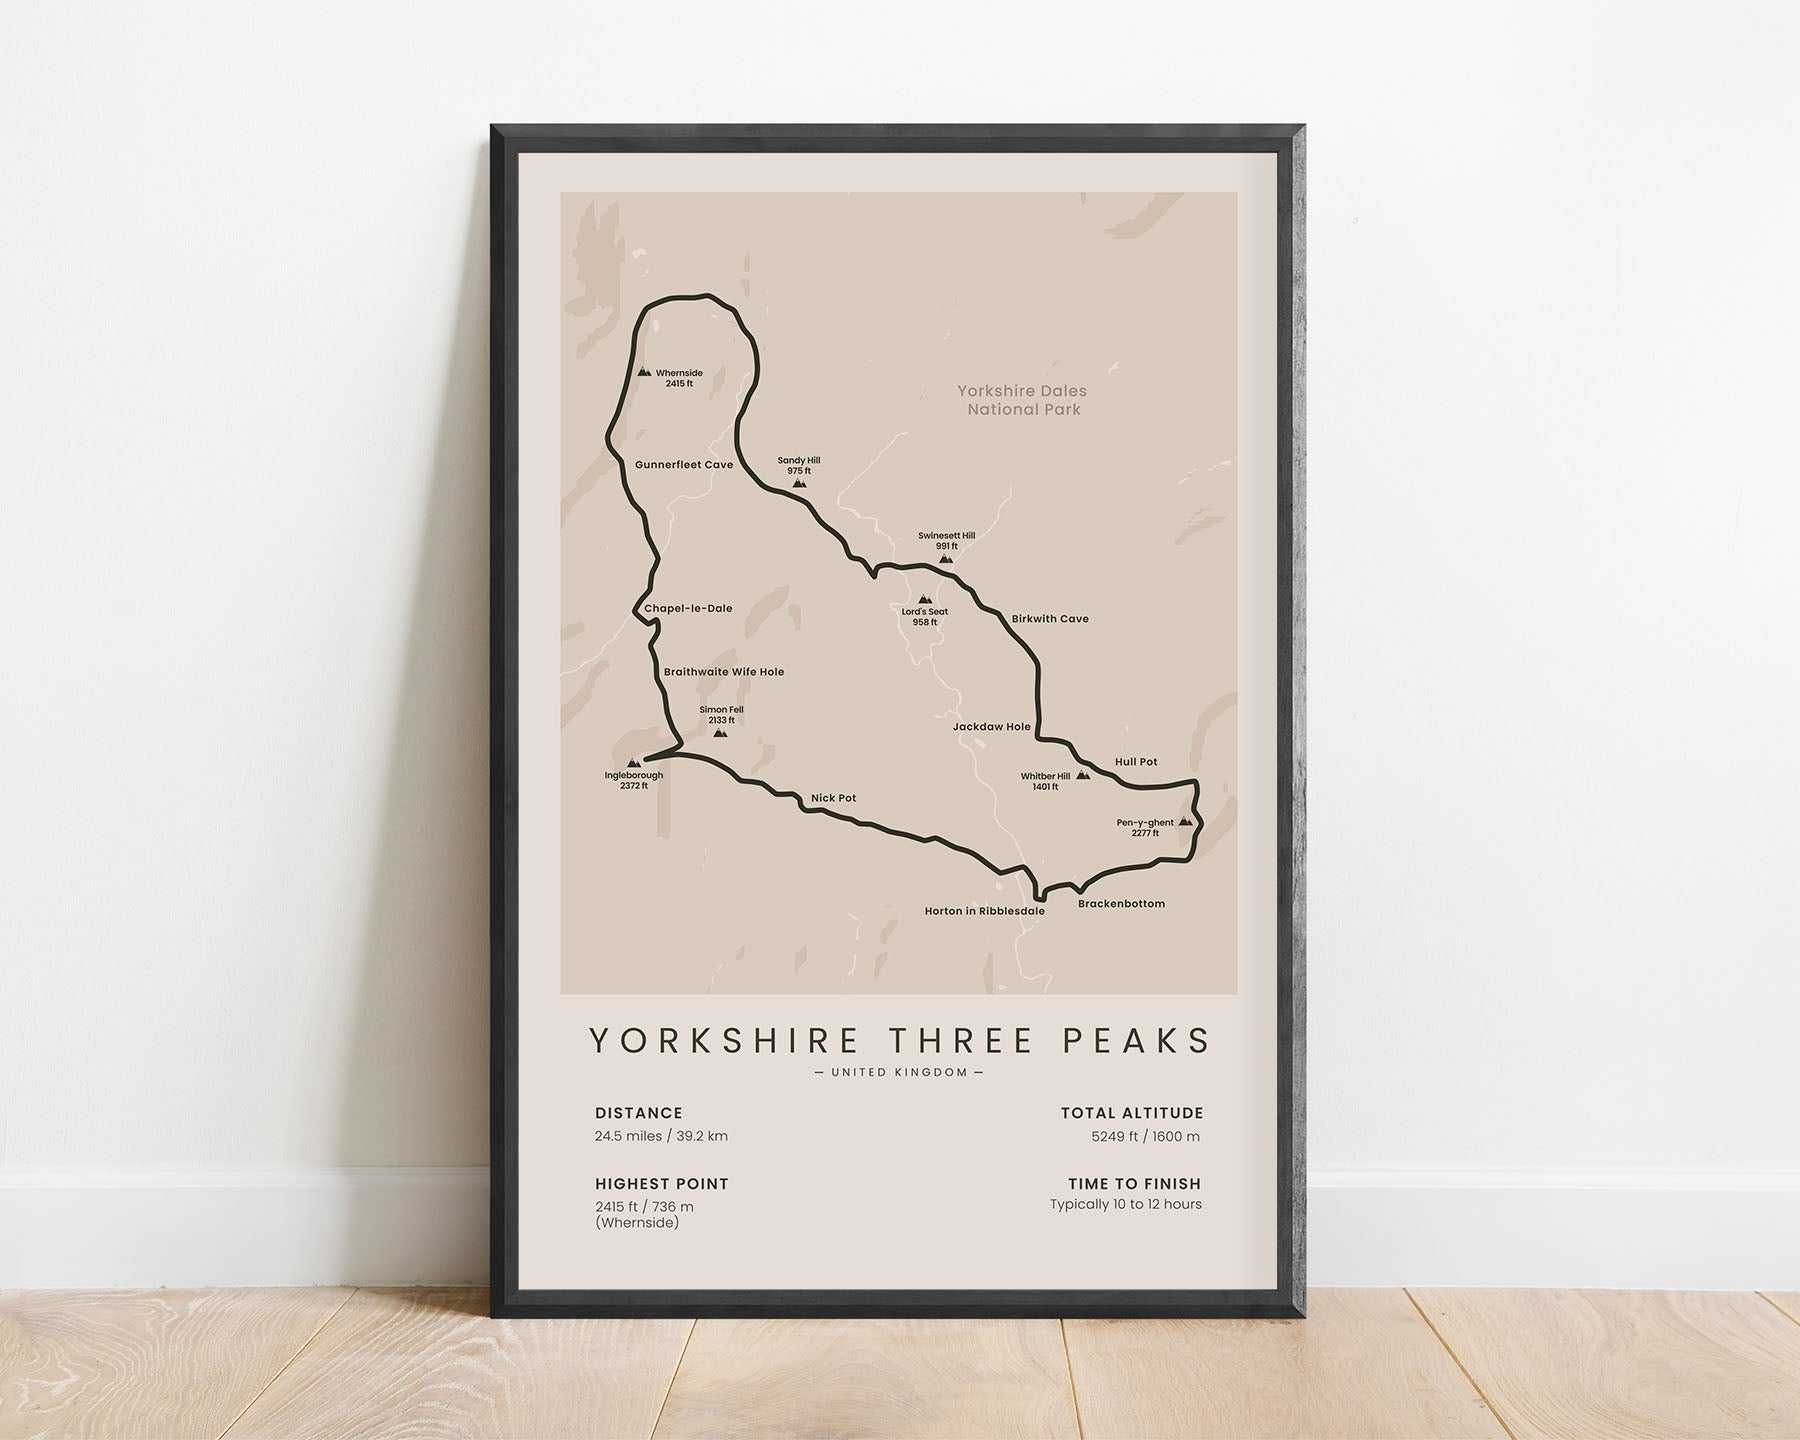 Yorkshire Three Peaks (Ingleborough) trail art with beige background